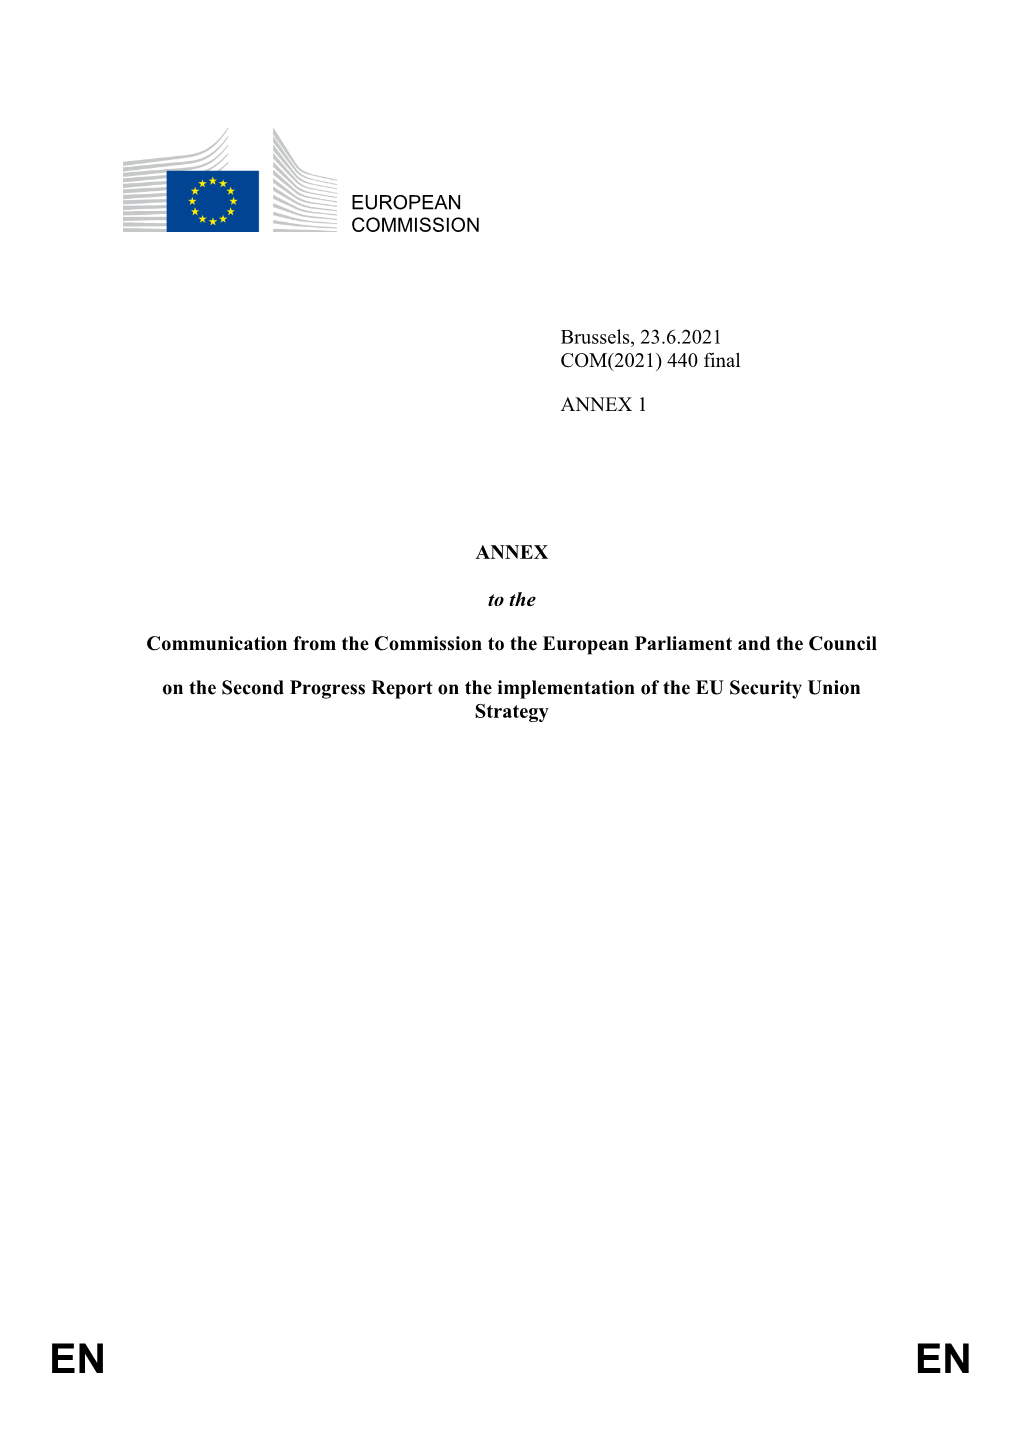 EUROPEAN COMMISSION Brussels, 23.6.2021 COM(2021) 440 Final